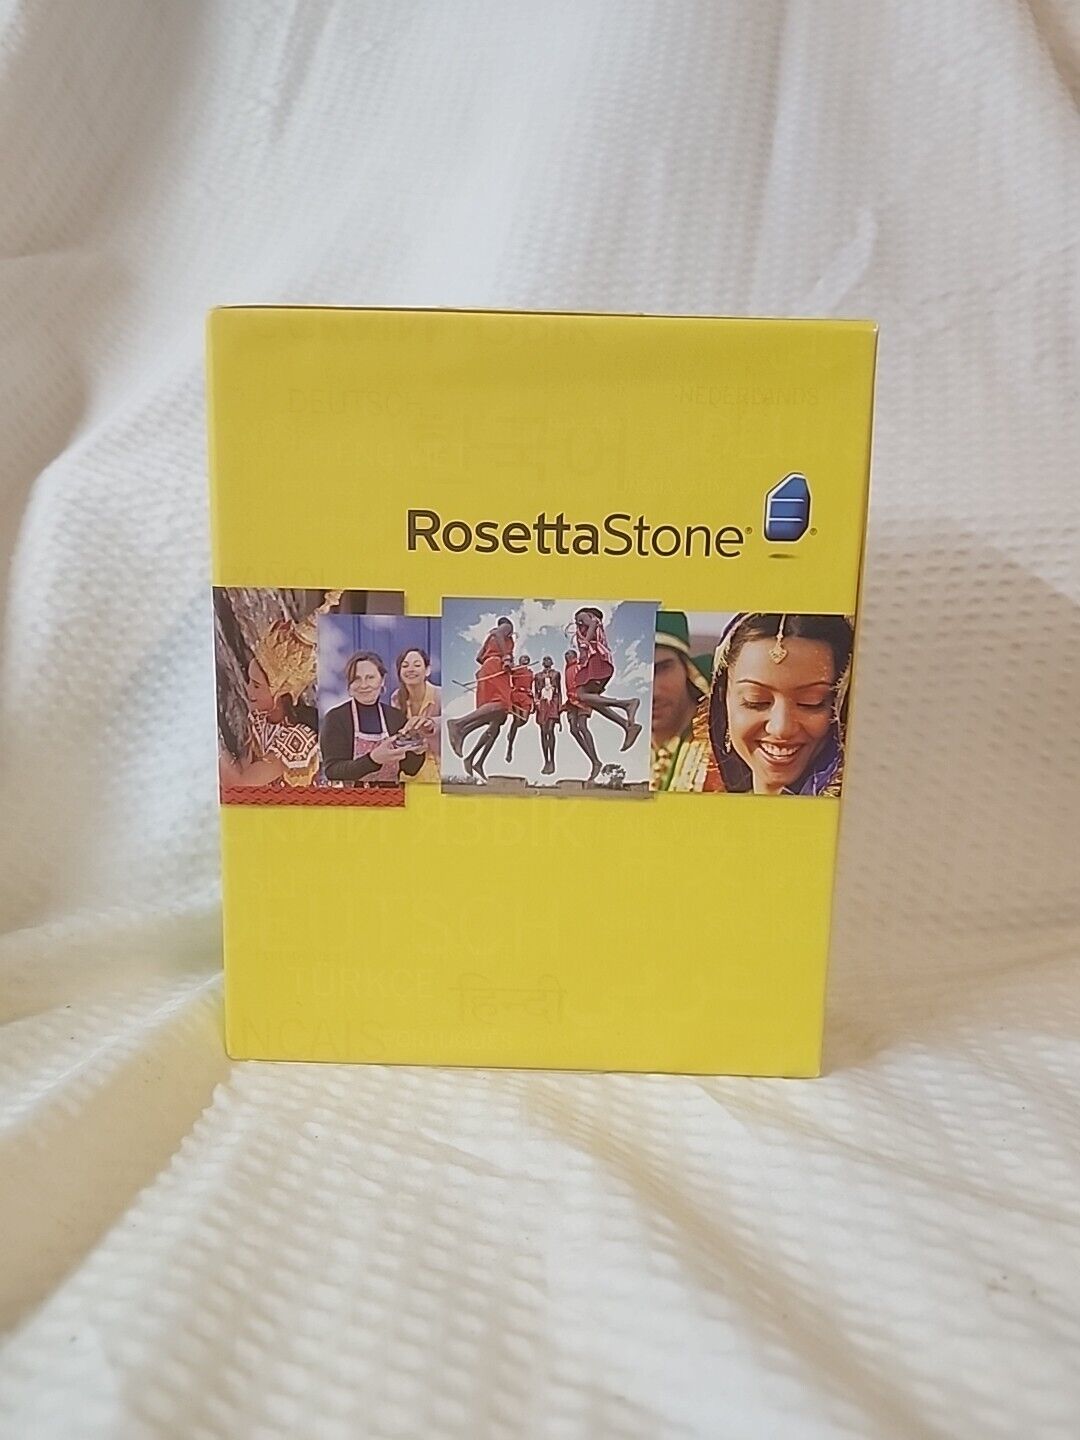 Rosetta Stone FRENCH Level 1